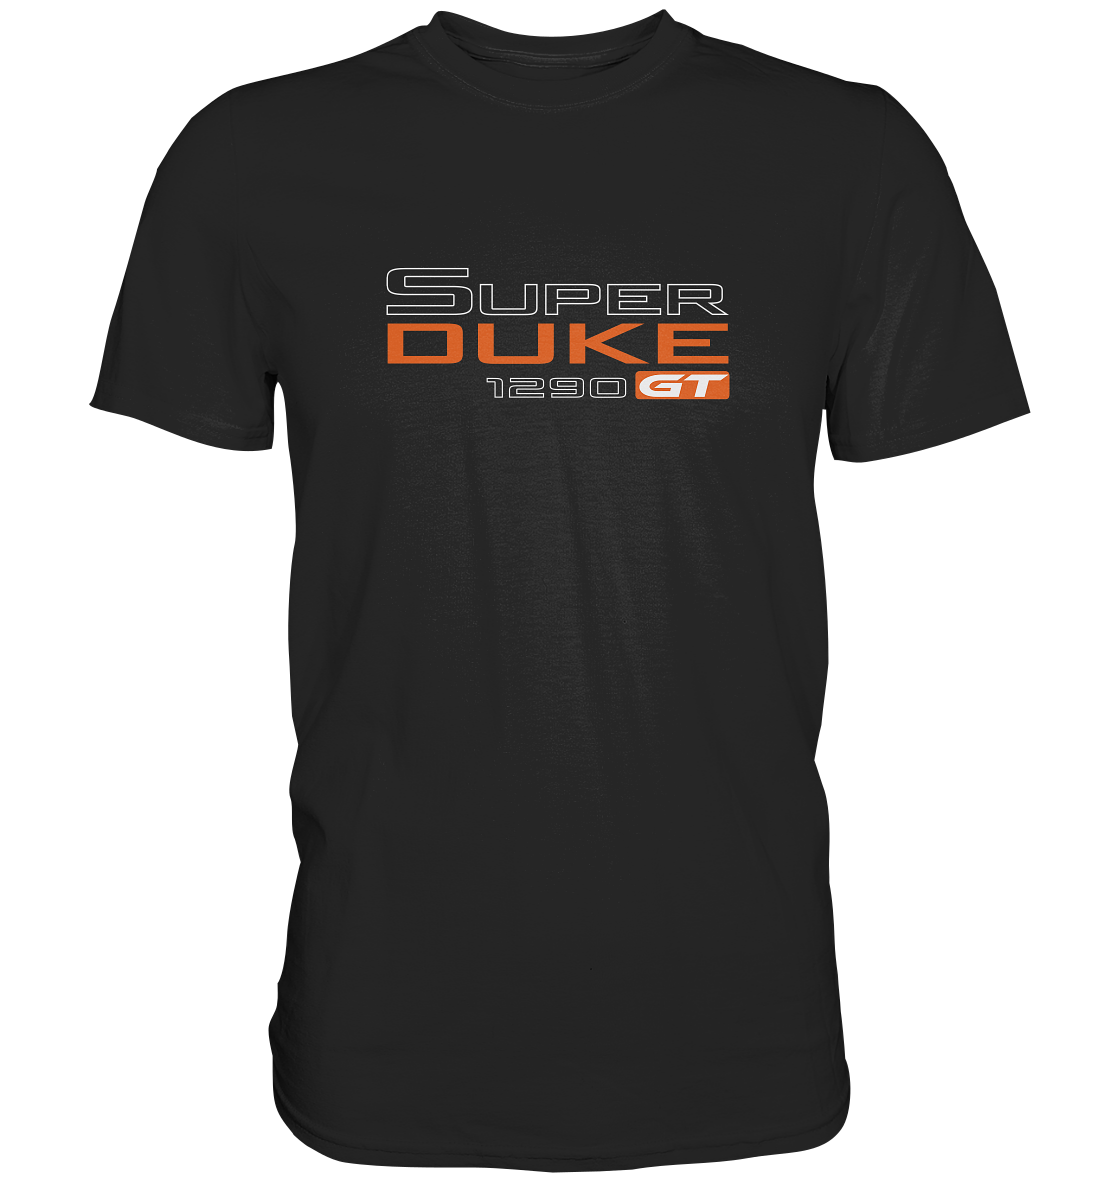 Super Duke 1290 GT - Premium unisex Shirt